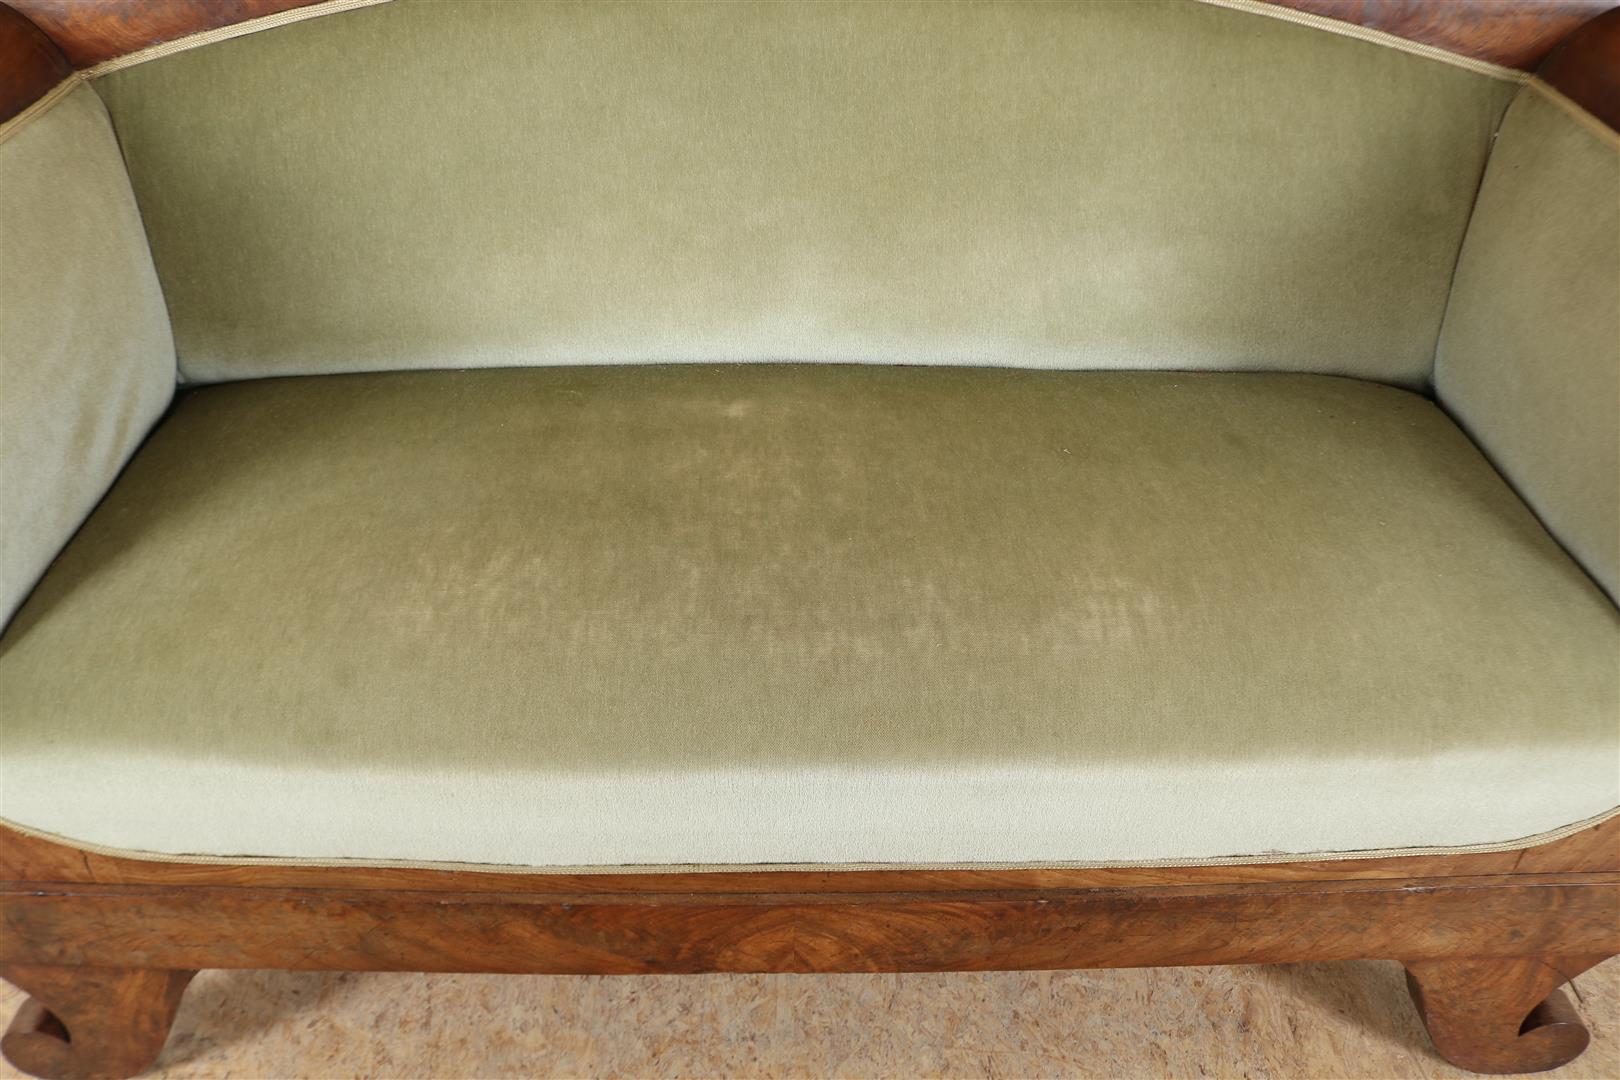 Mahogany Empire sofa in green velvet, 19th century, 100 x 185 x 68 cm. - Image 5 of 5